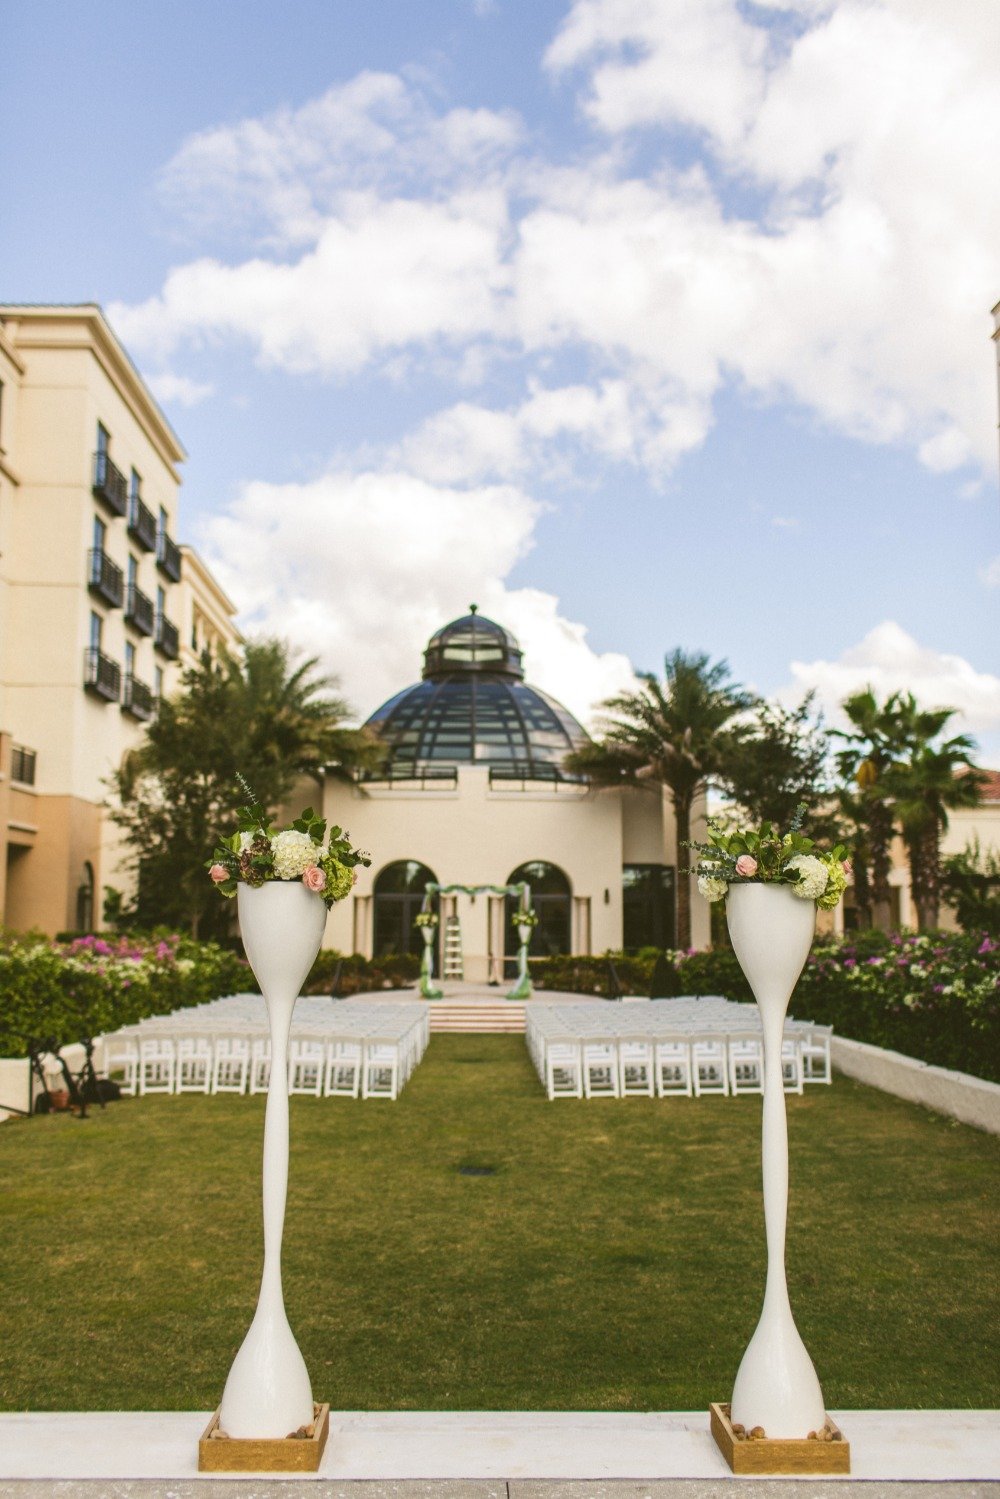 Outdoor wedding ceremony space